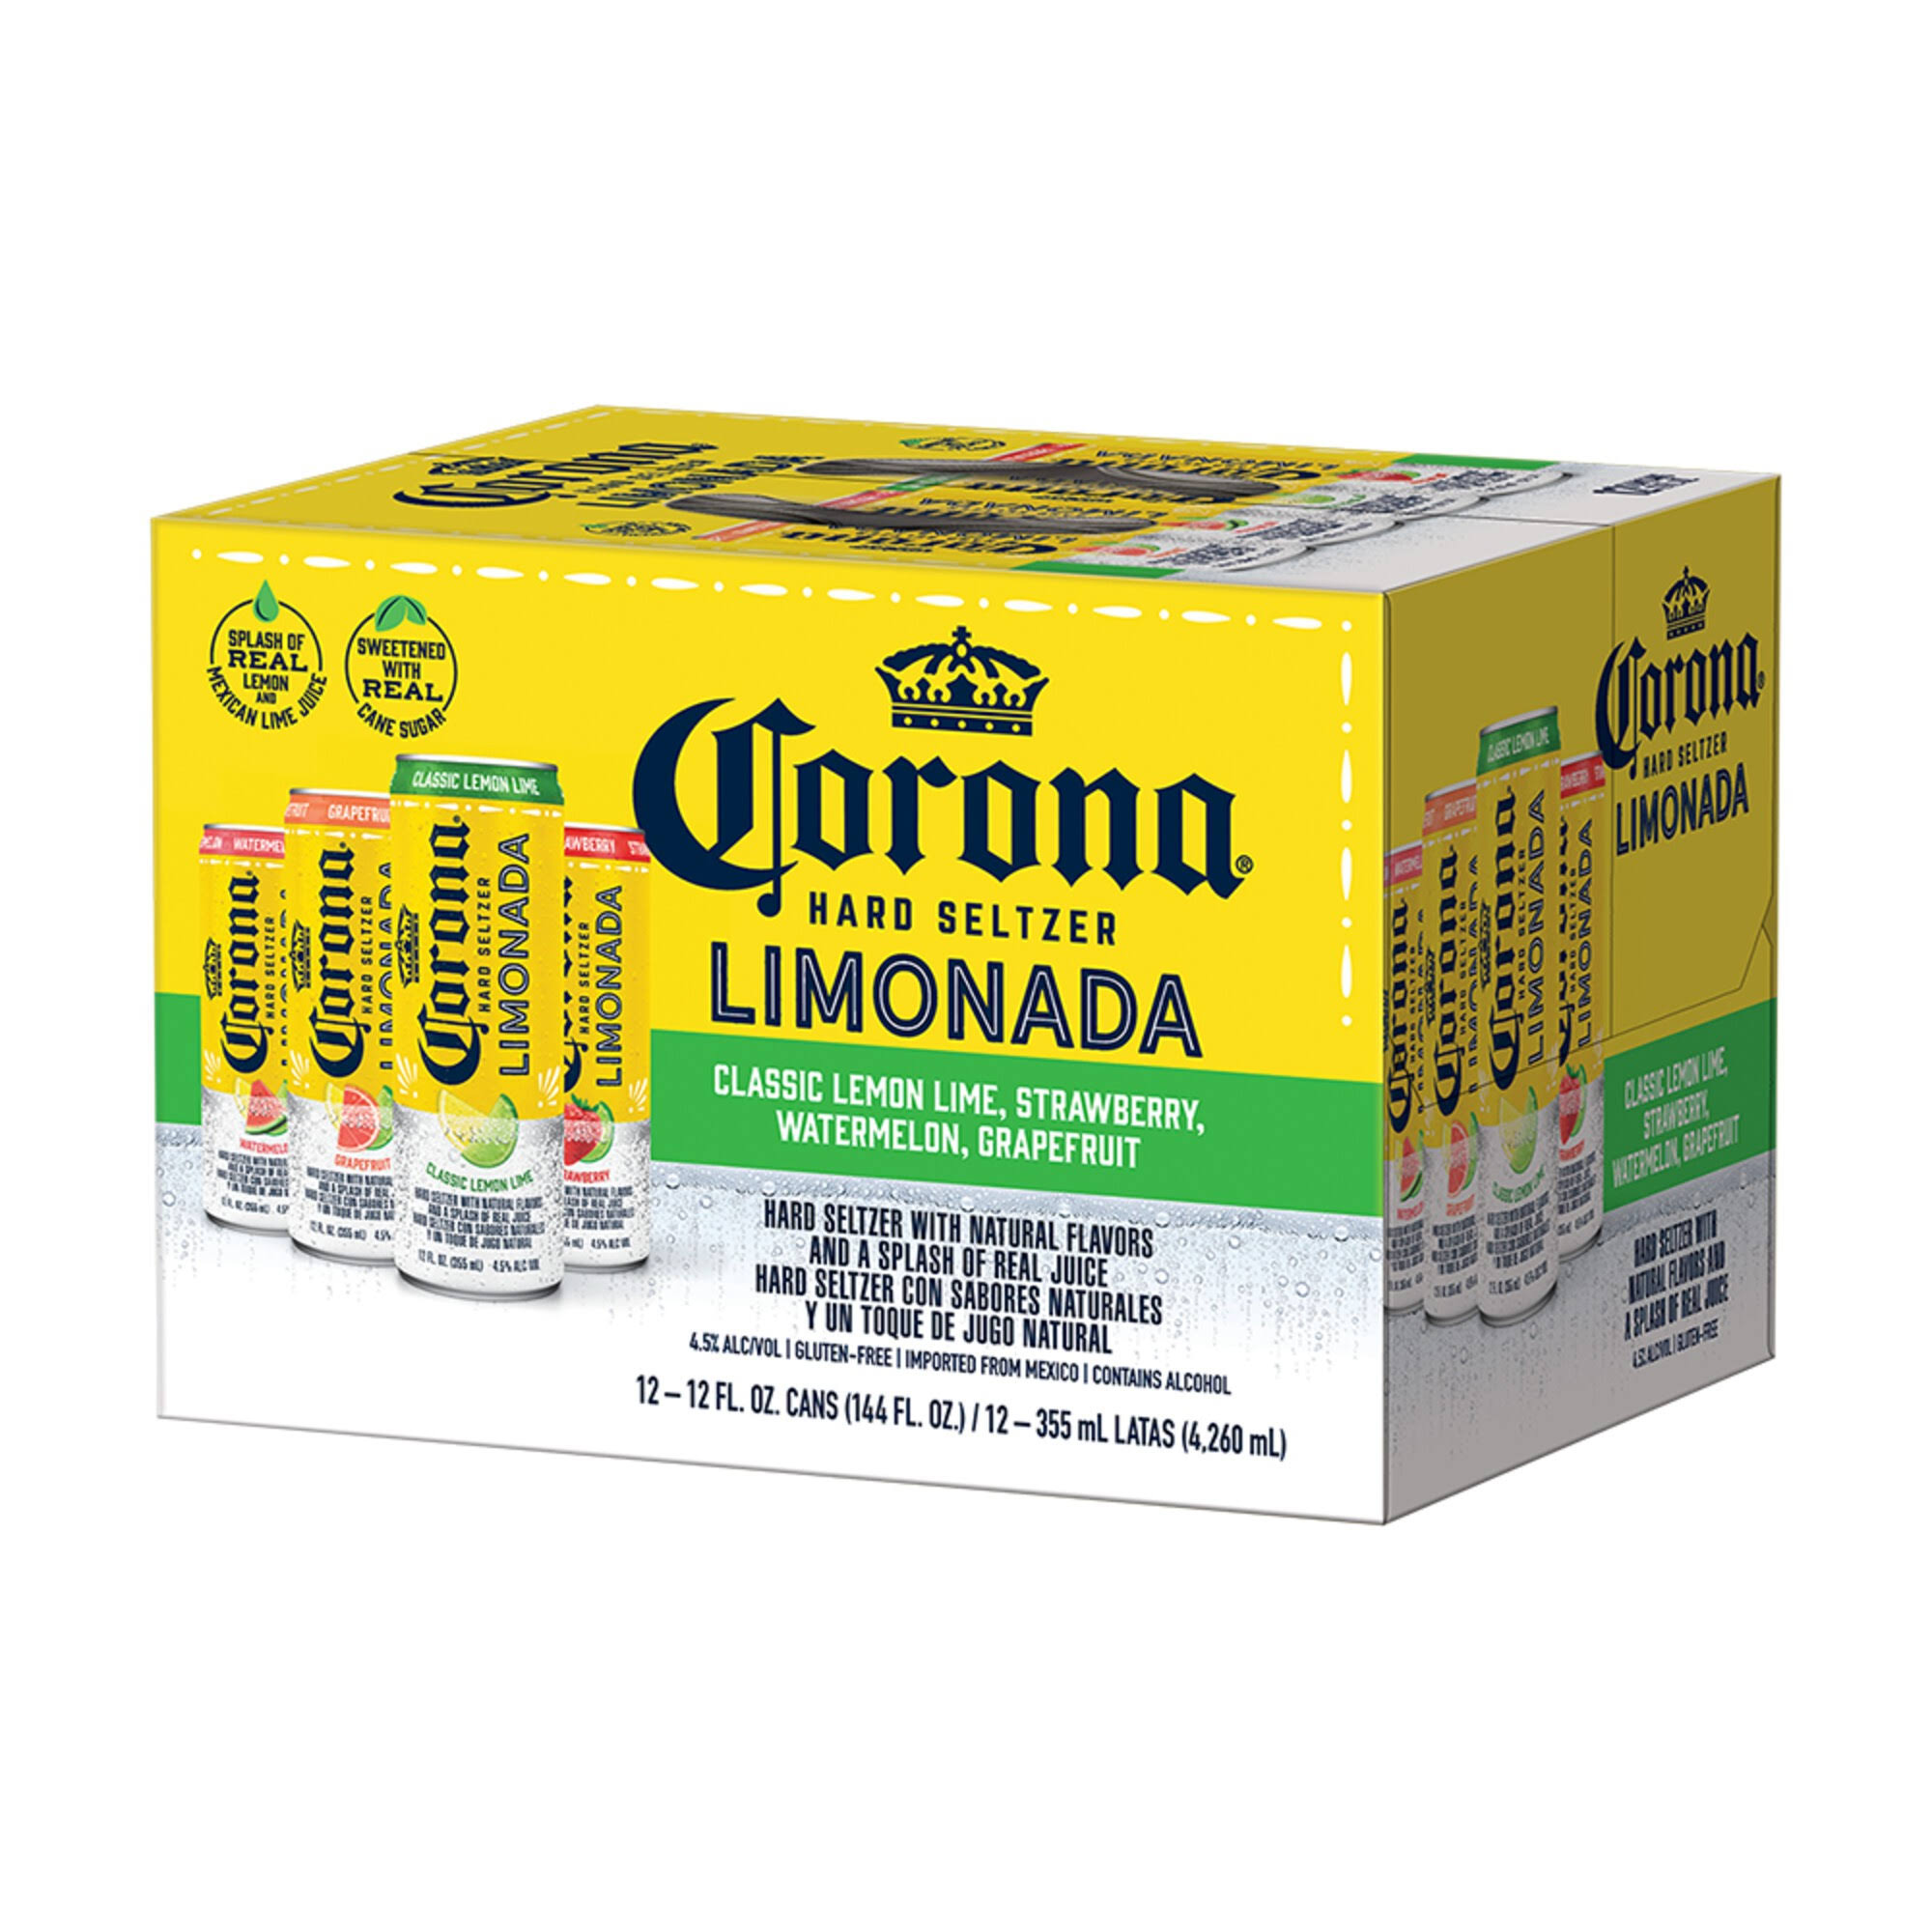 Corona Hard Seltzer, Limonada - 12 pack, 12 fl oz cans